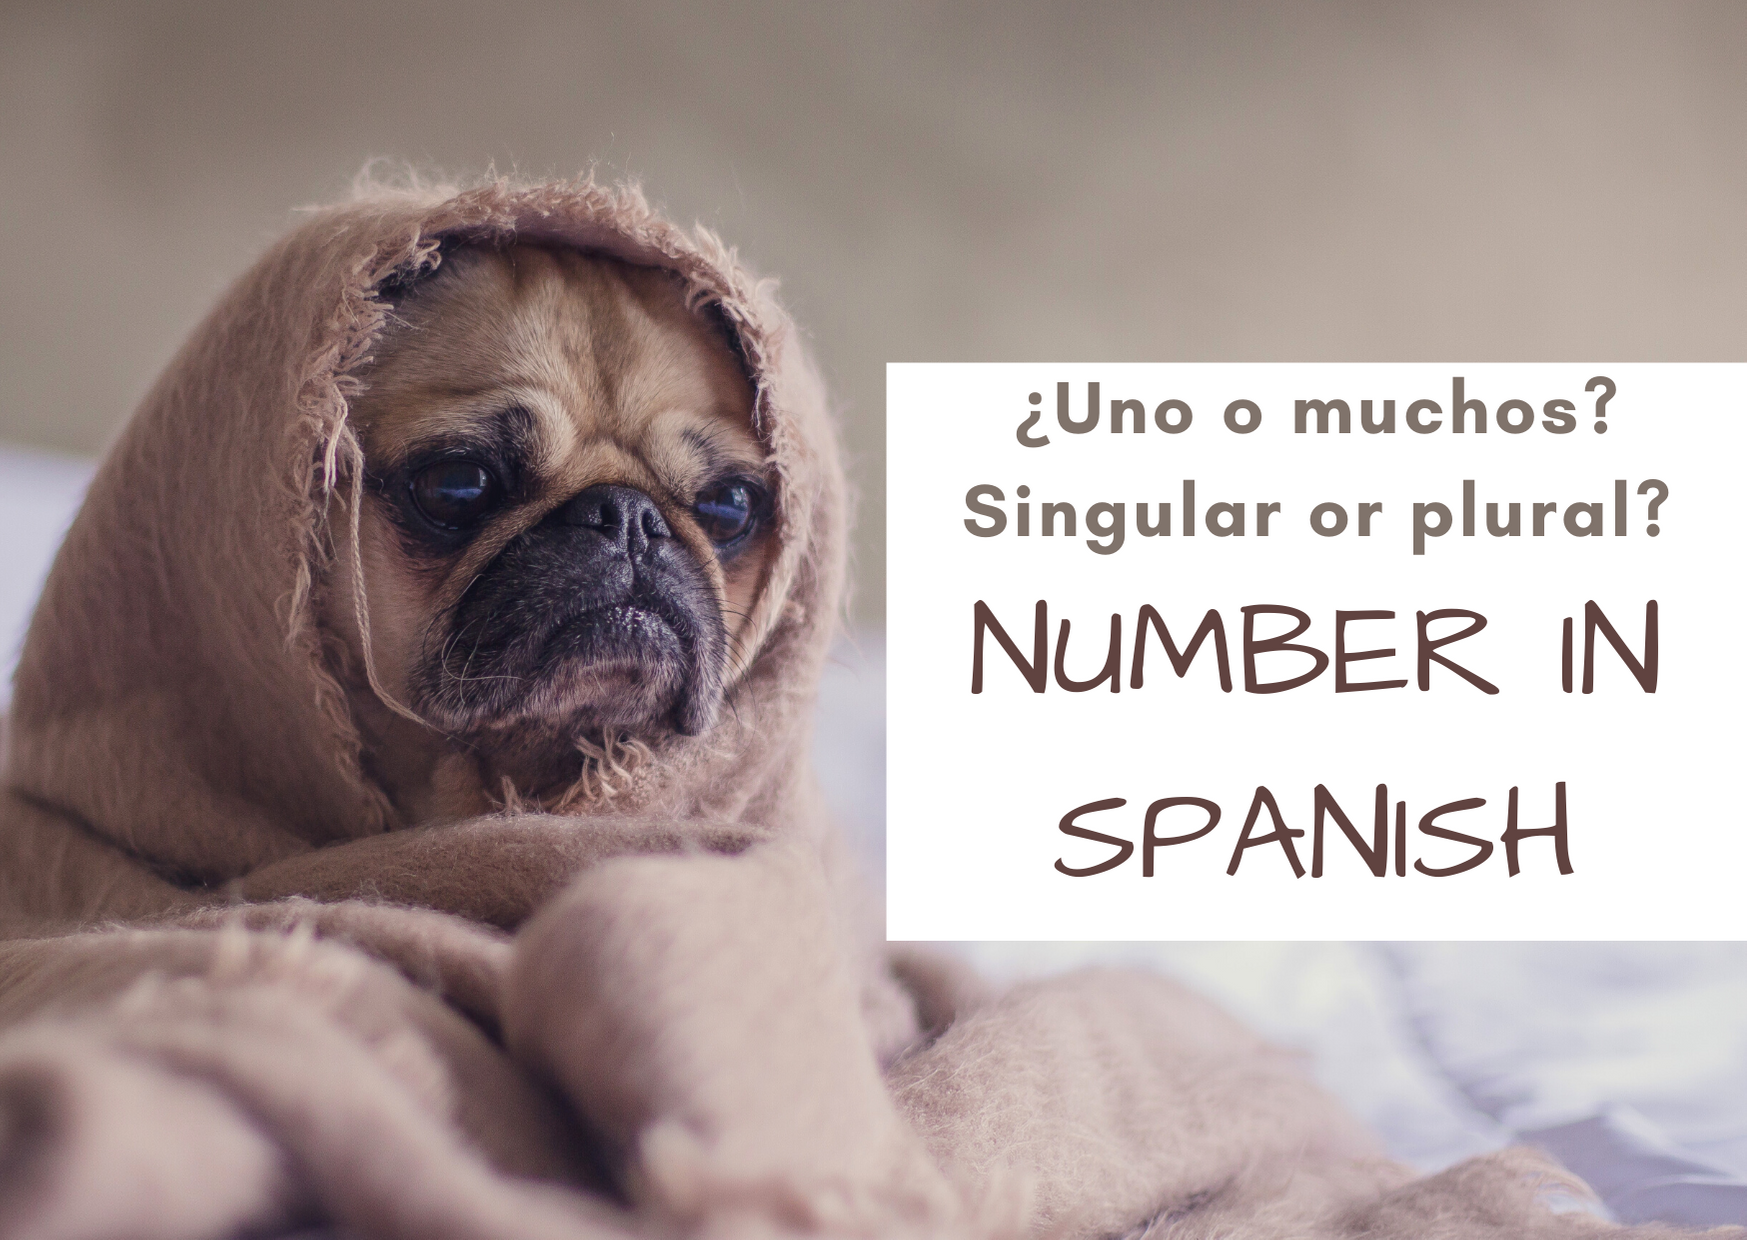 Number in Spanish. Singular or plural